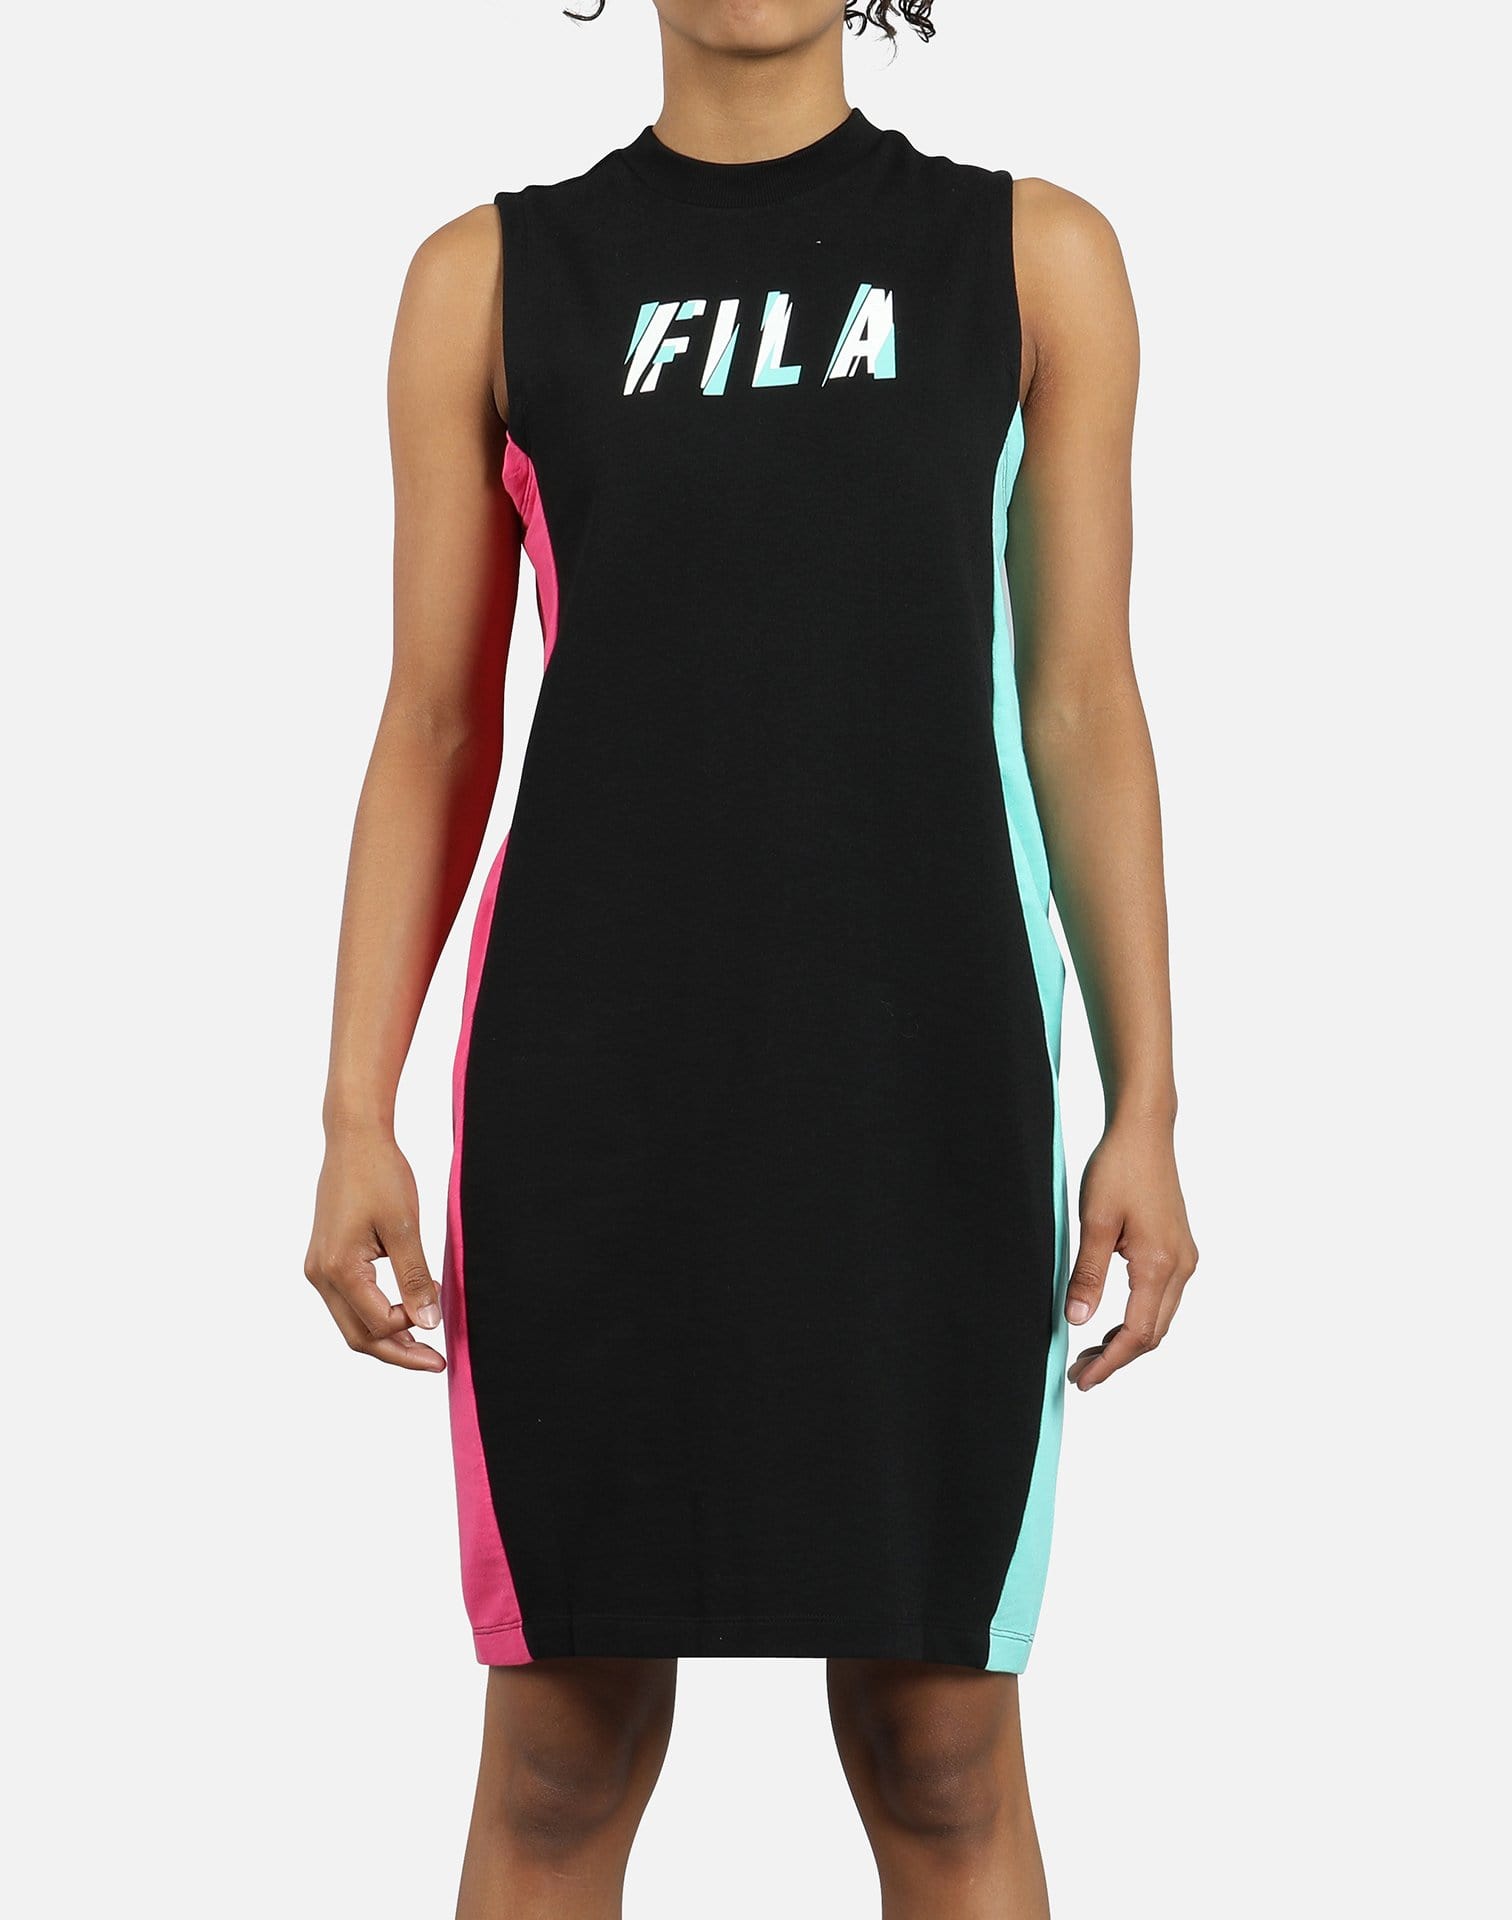 FILA Women's Wren Dress